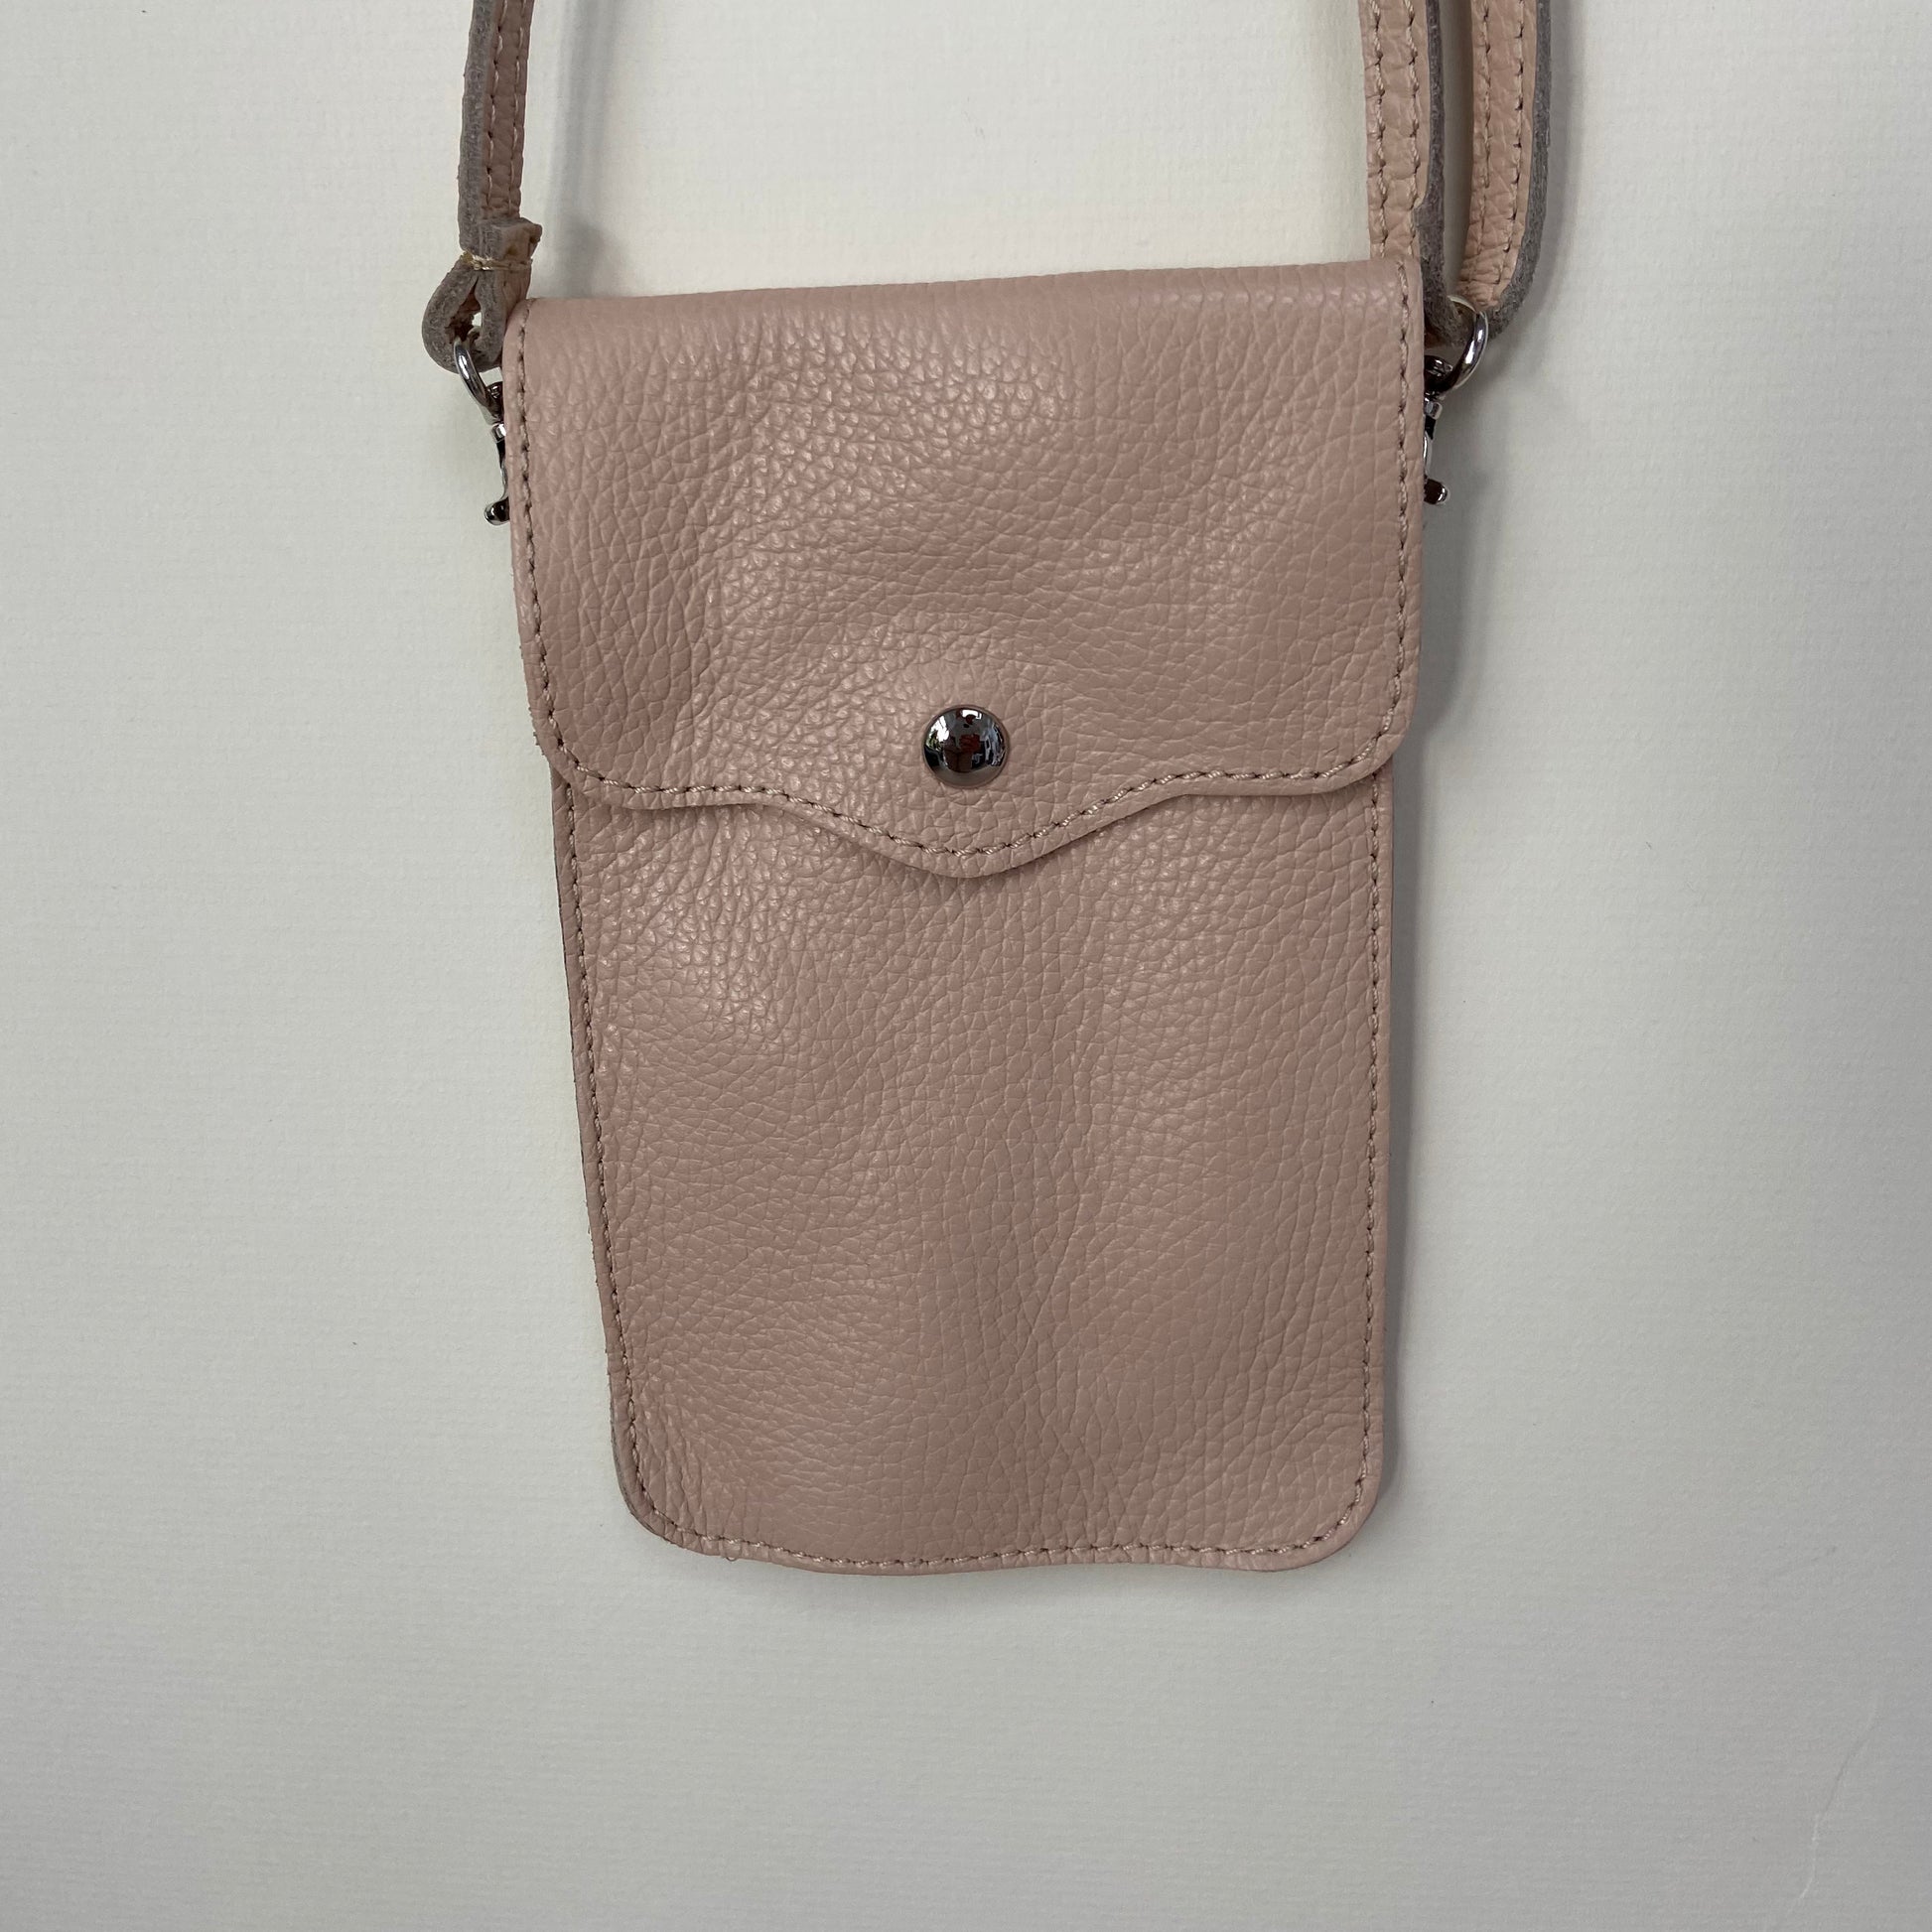 Italian Leather Phone Bag - Keep essentials close to hand!